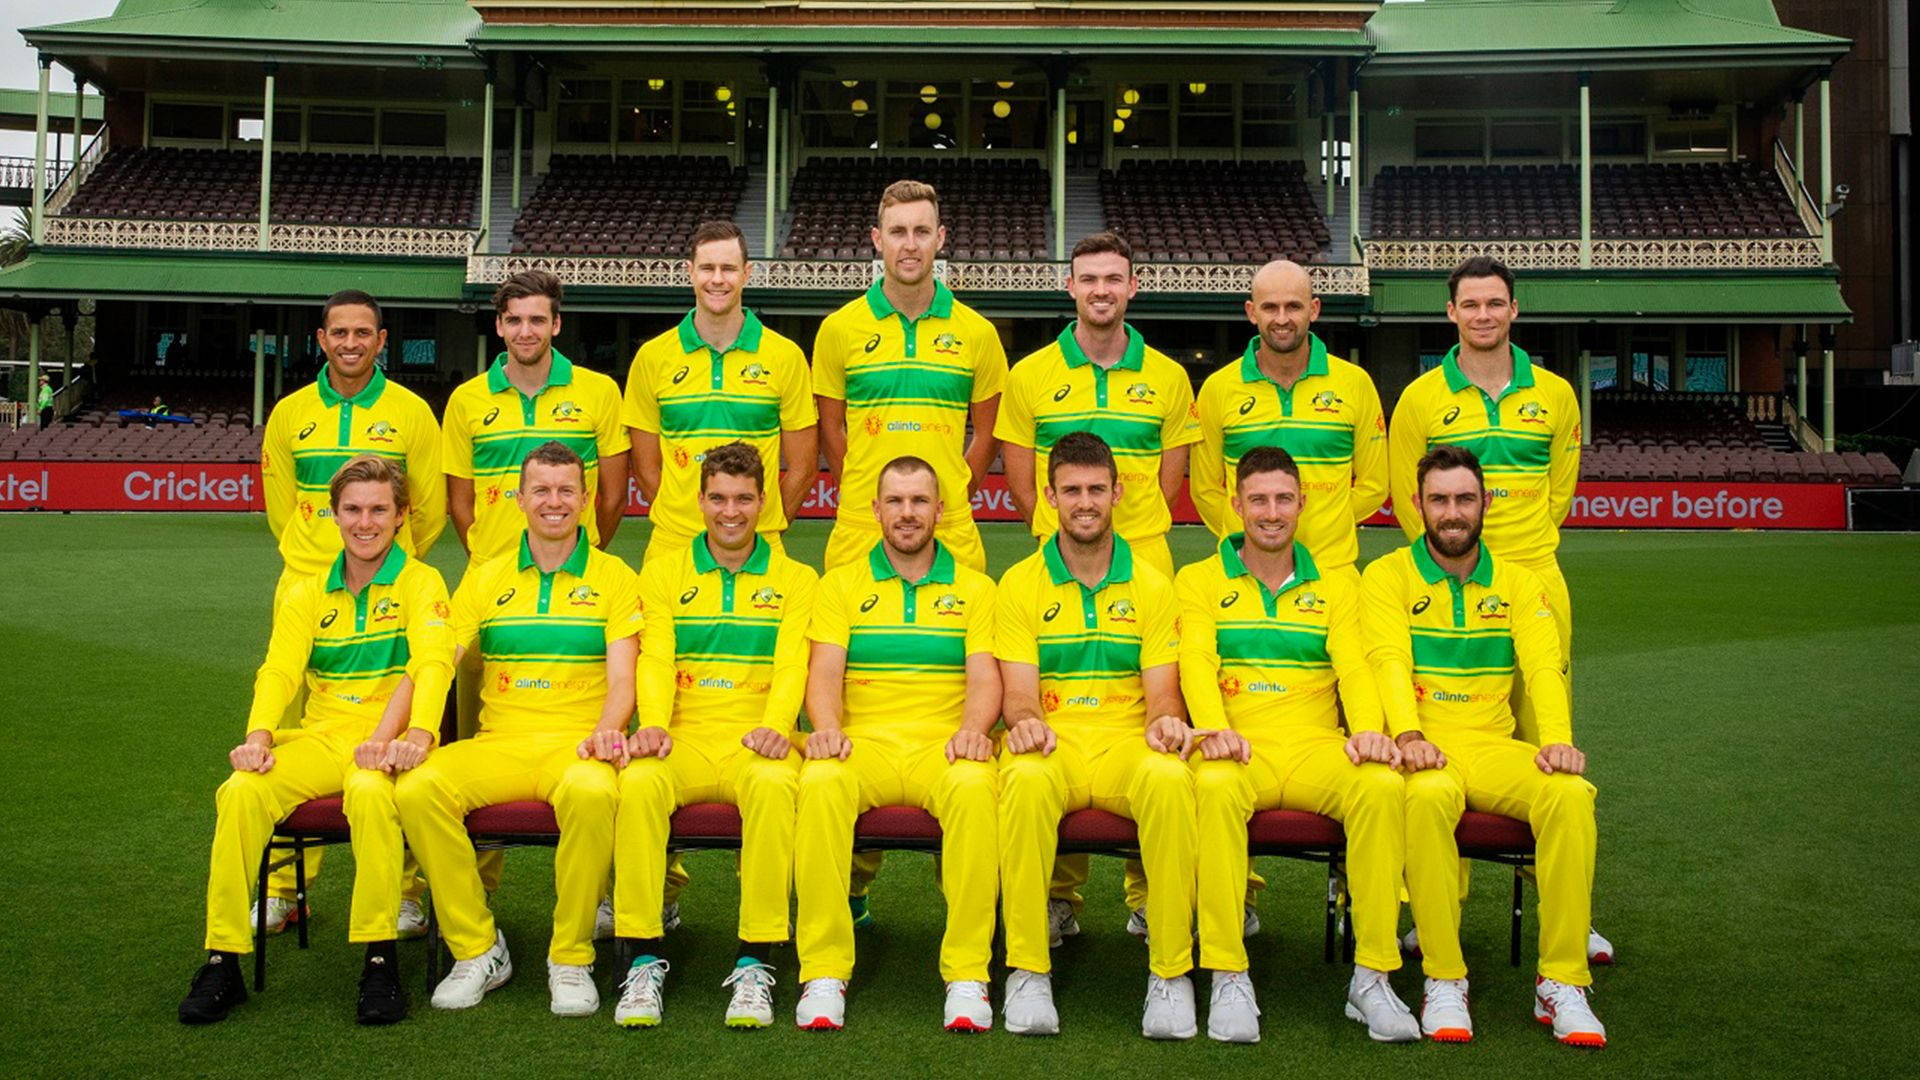 Dynamic Australia Cricket Team In Action Background